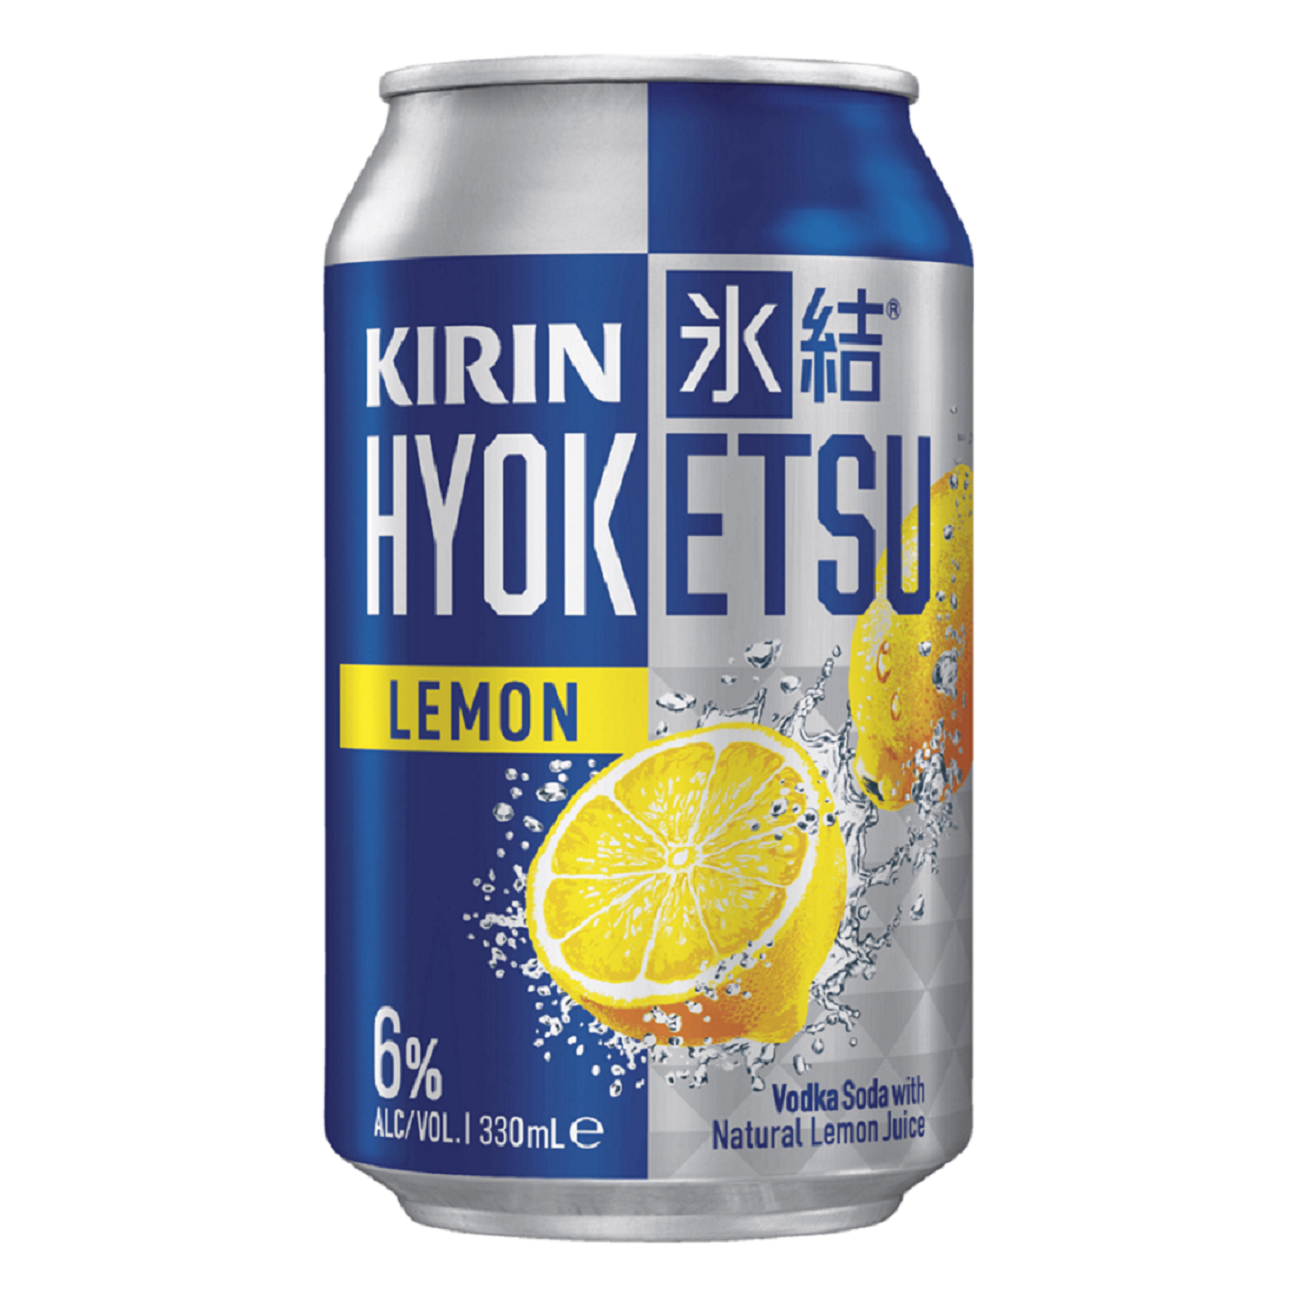 Kirin Hyoketsu Vodka Soda with Lemon 6% 6 Pack 330ml Cans